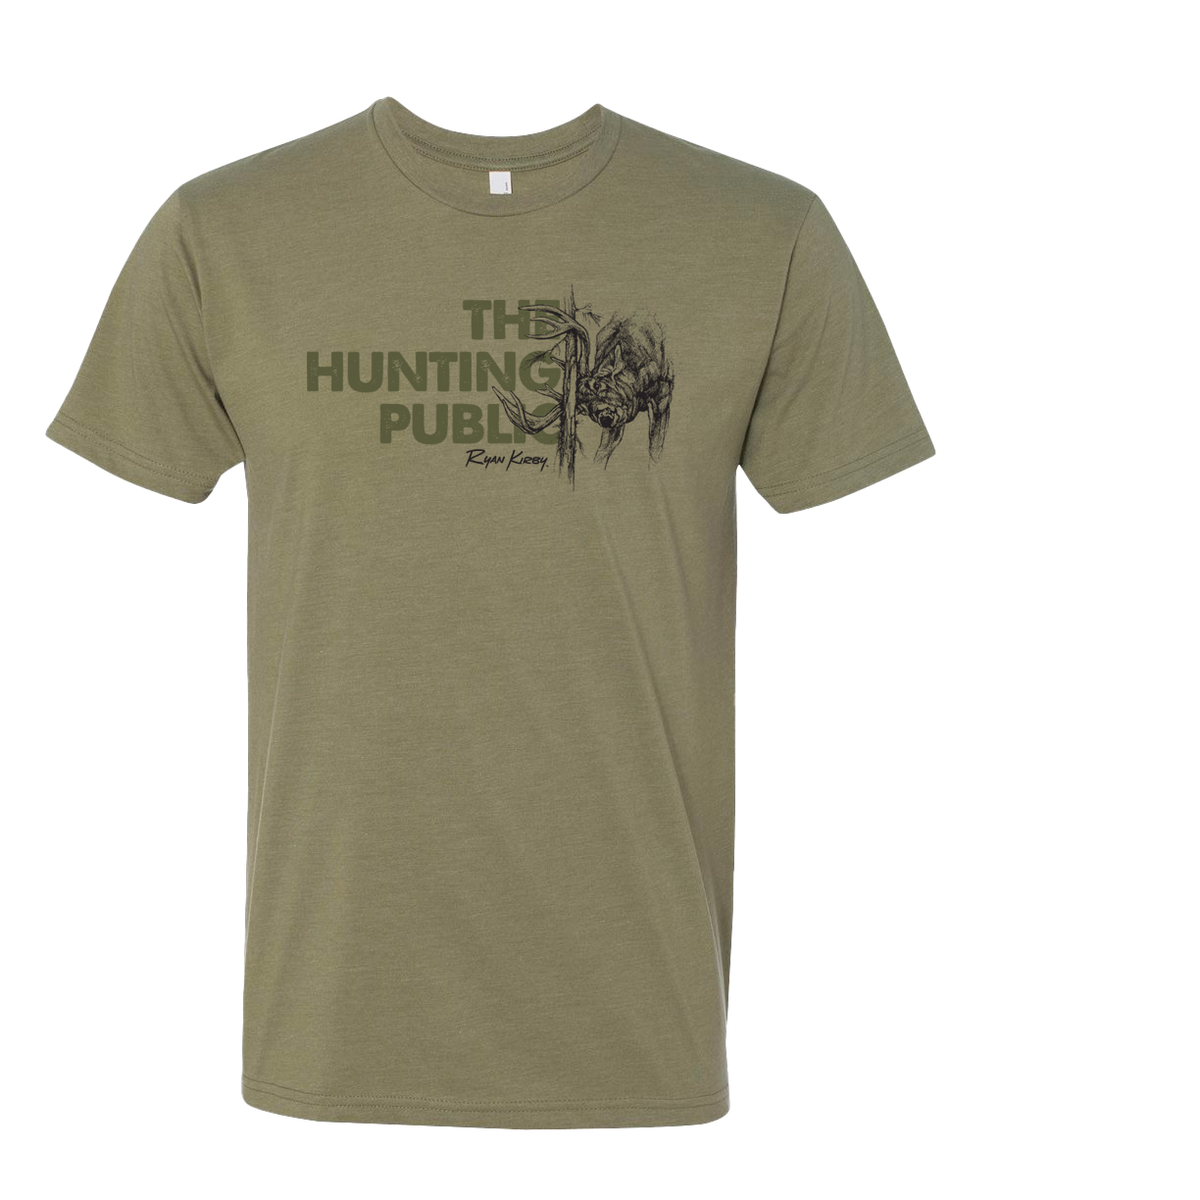 Rigby Classic Hunting Shirt in Green